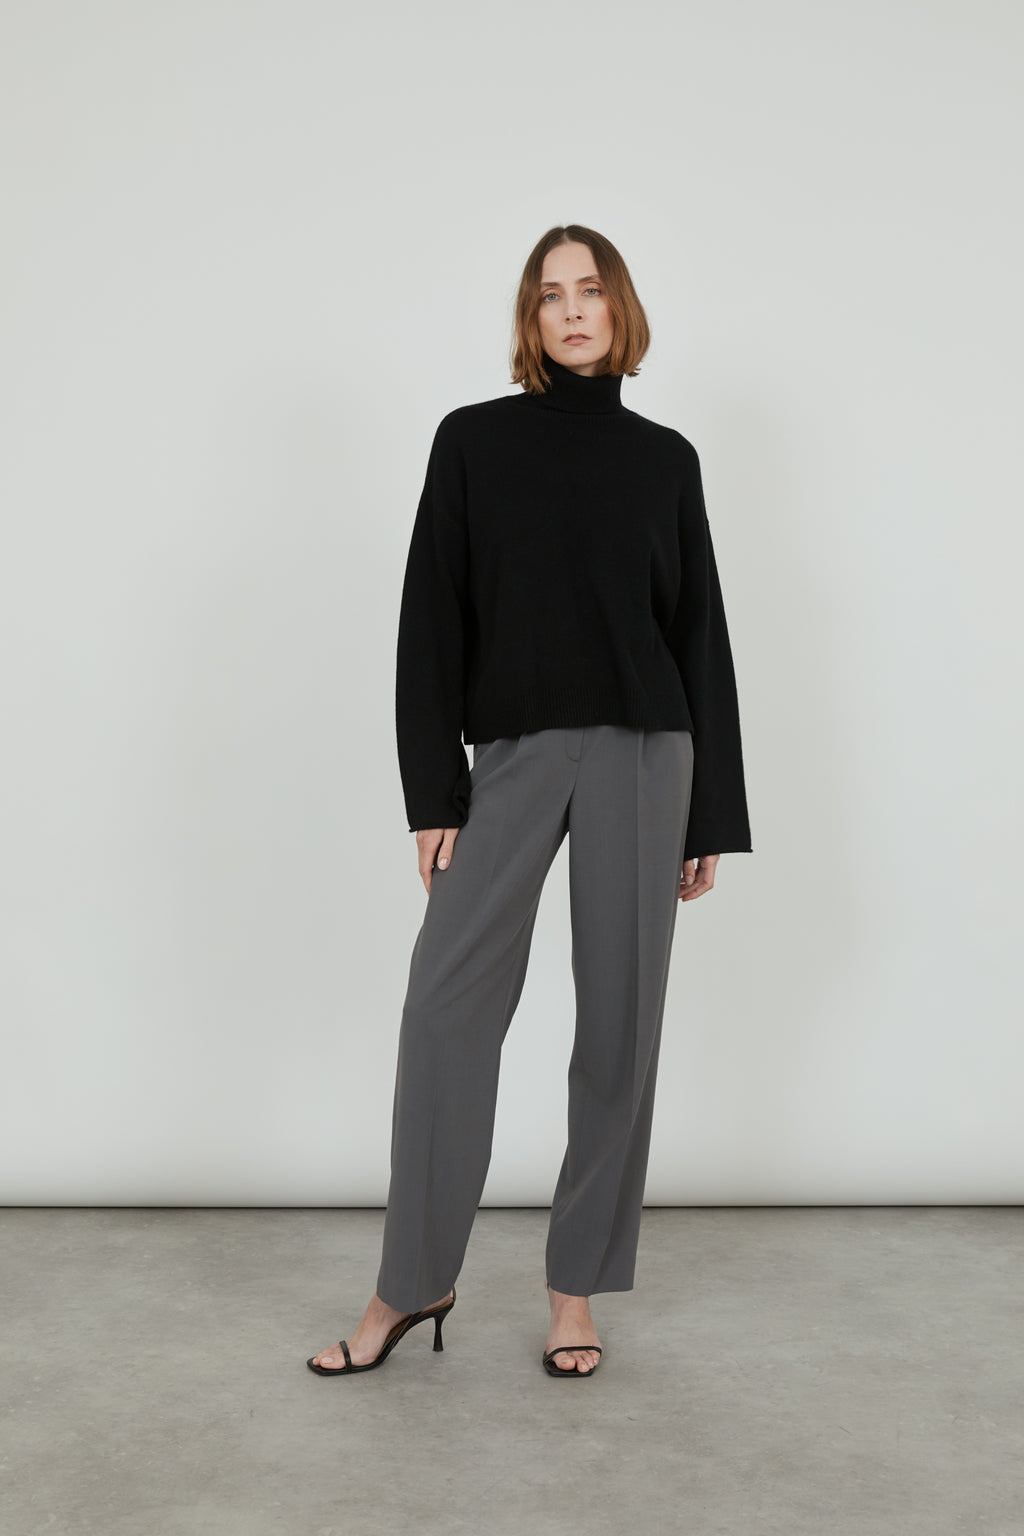 Alicia knit | Black - Cashmere wool